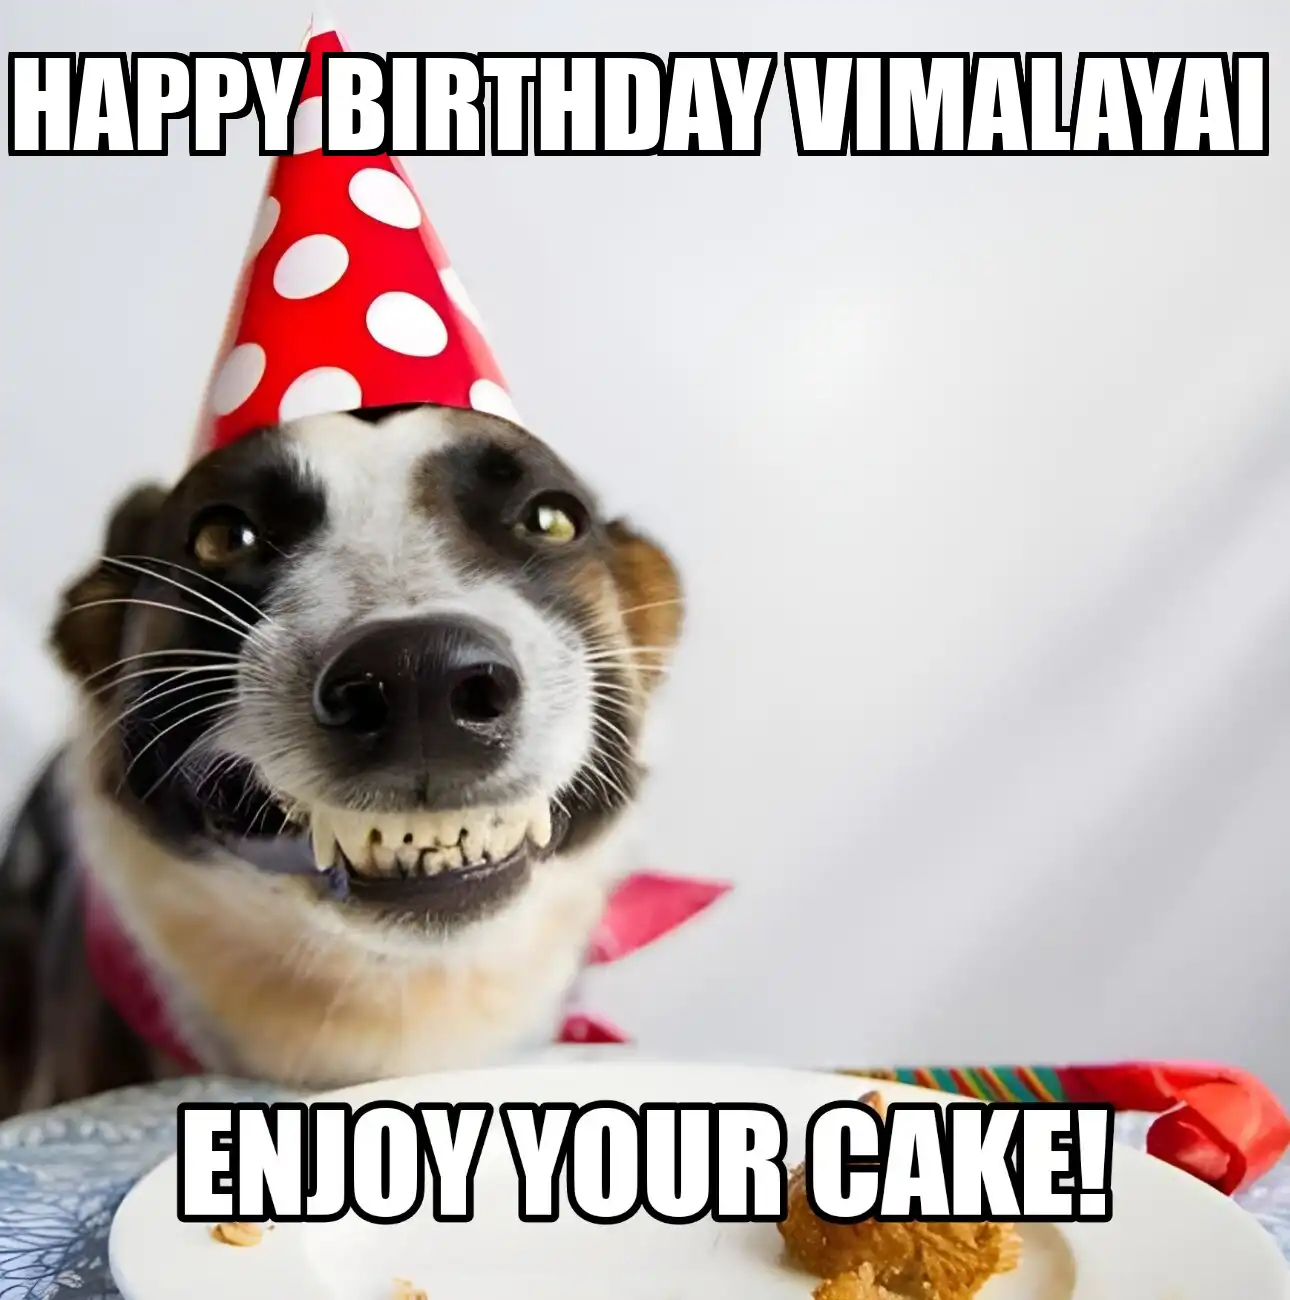 Happy Birthday Vimalayai Enjoy Your Cake Dog Meme